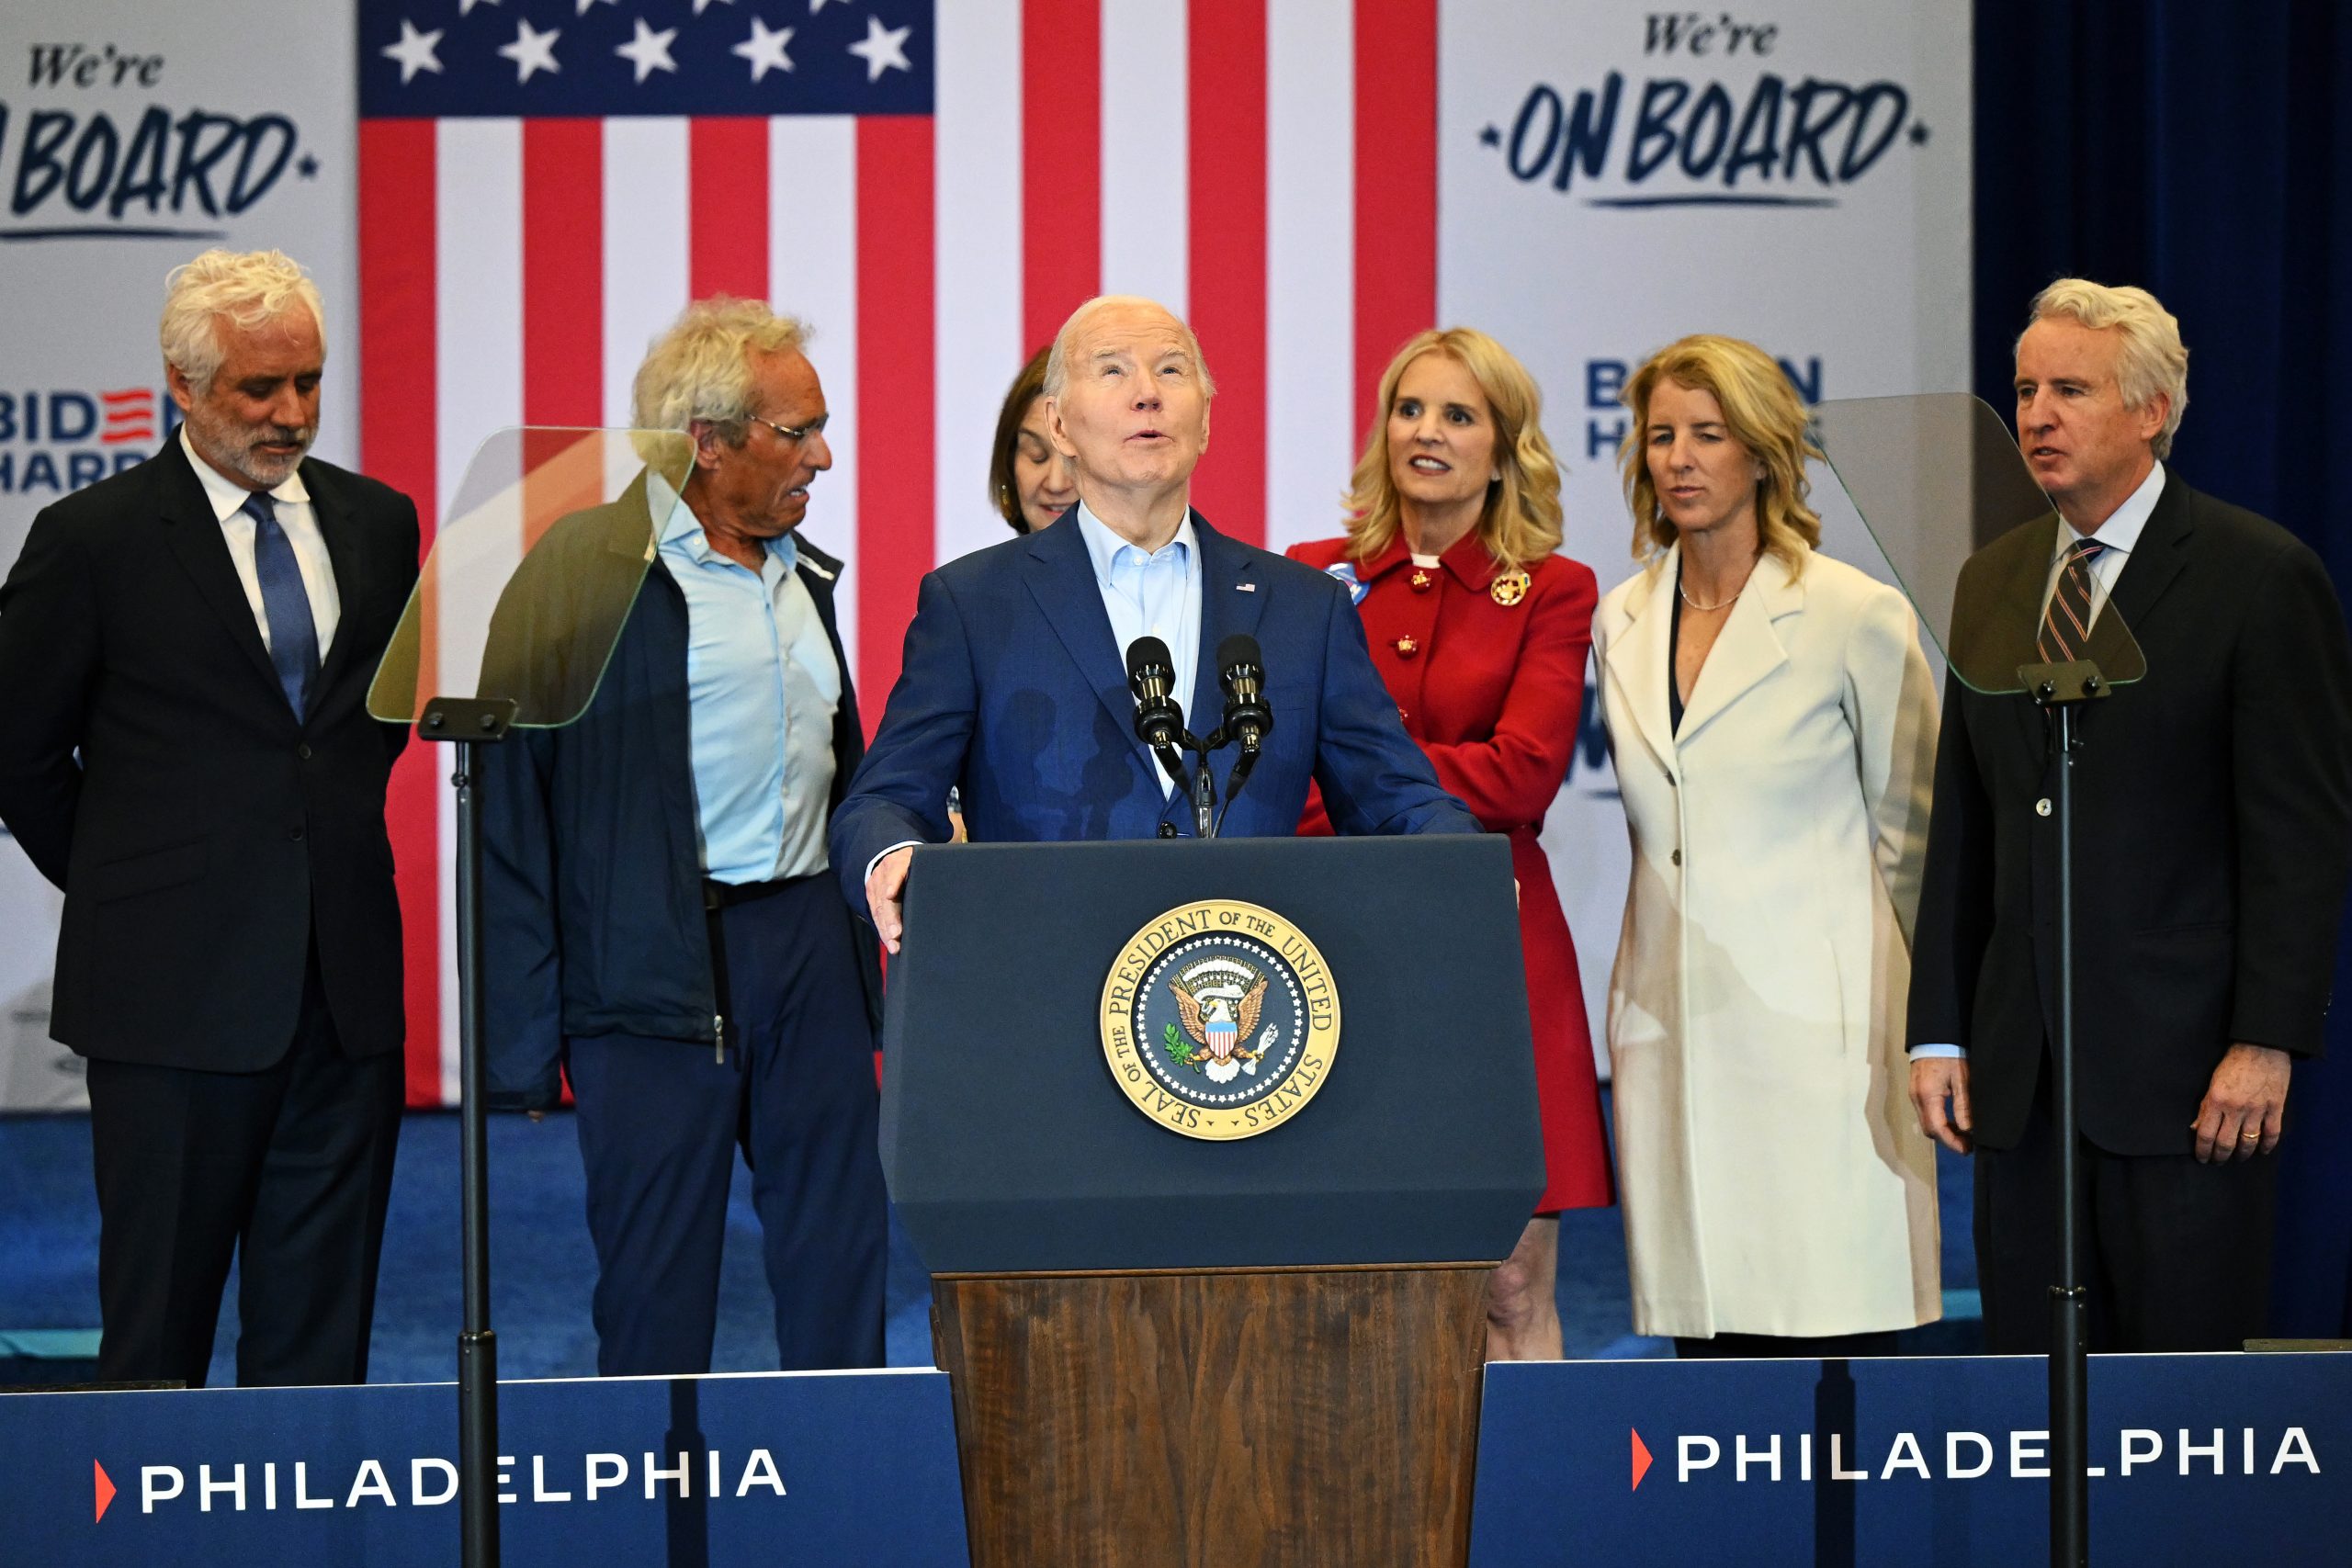 Biden highlights Kennedy Clan endorsement in lively Philadelphia speech, sprinkled with gaffes